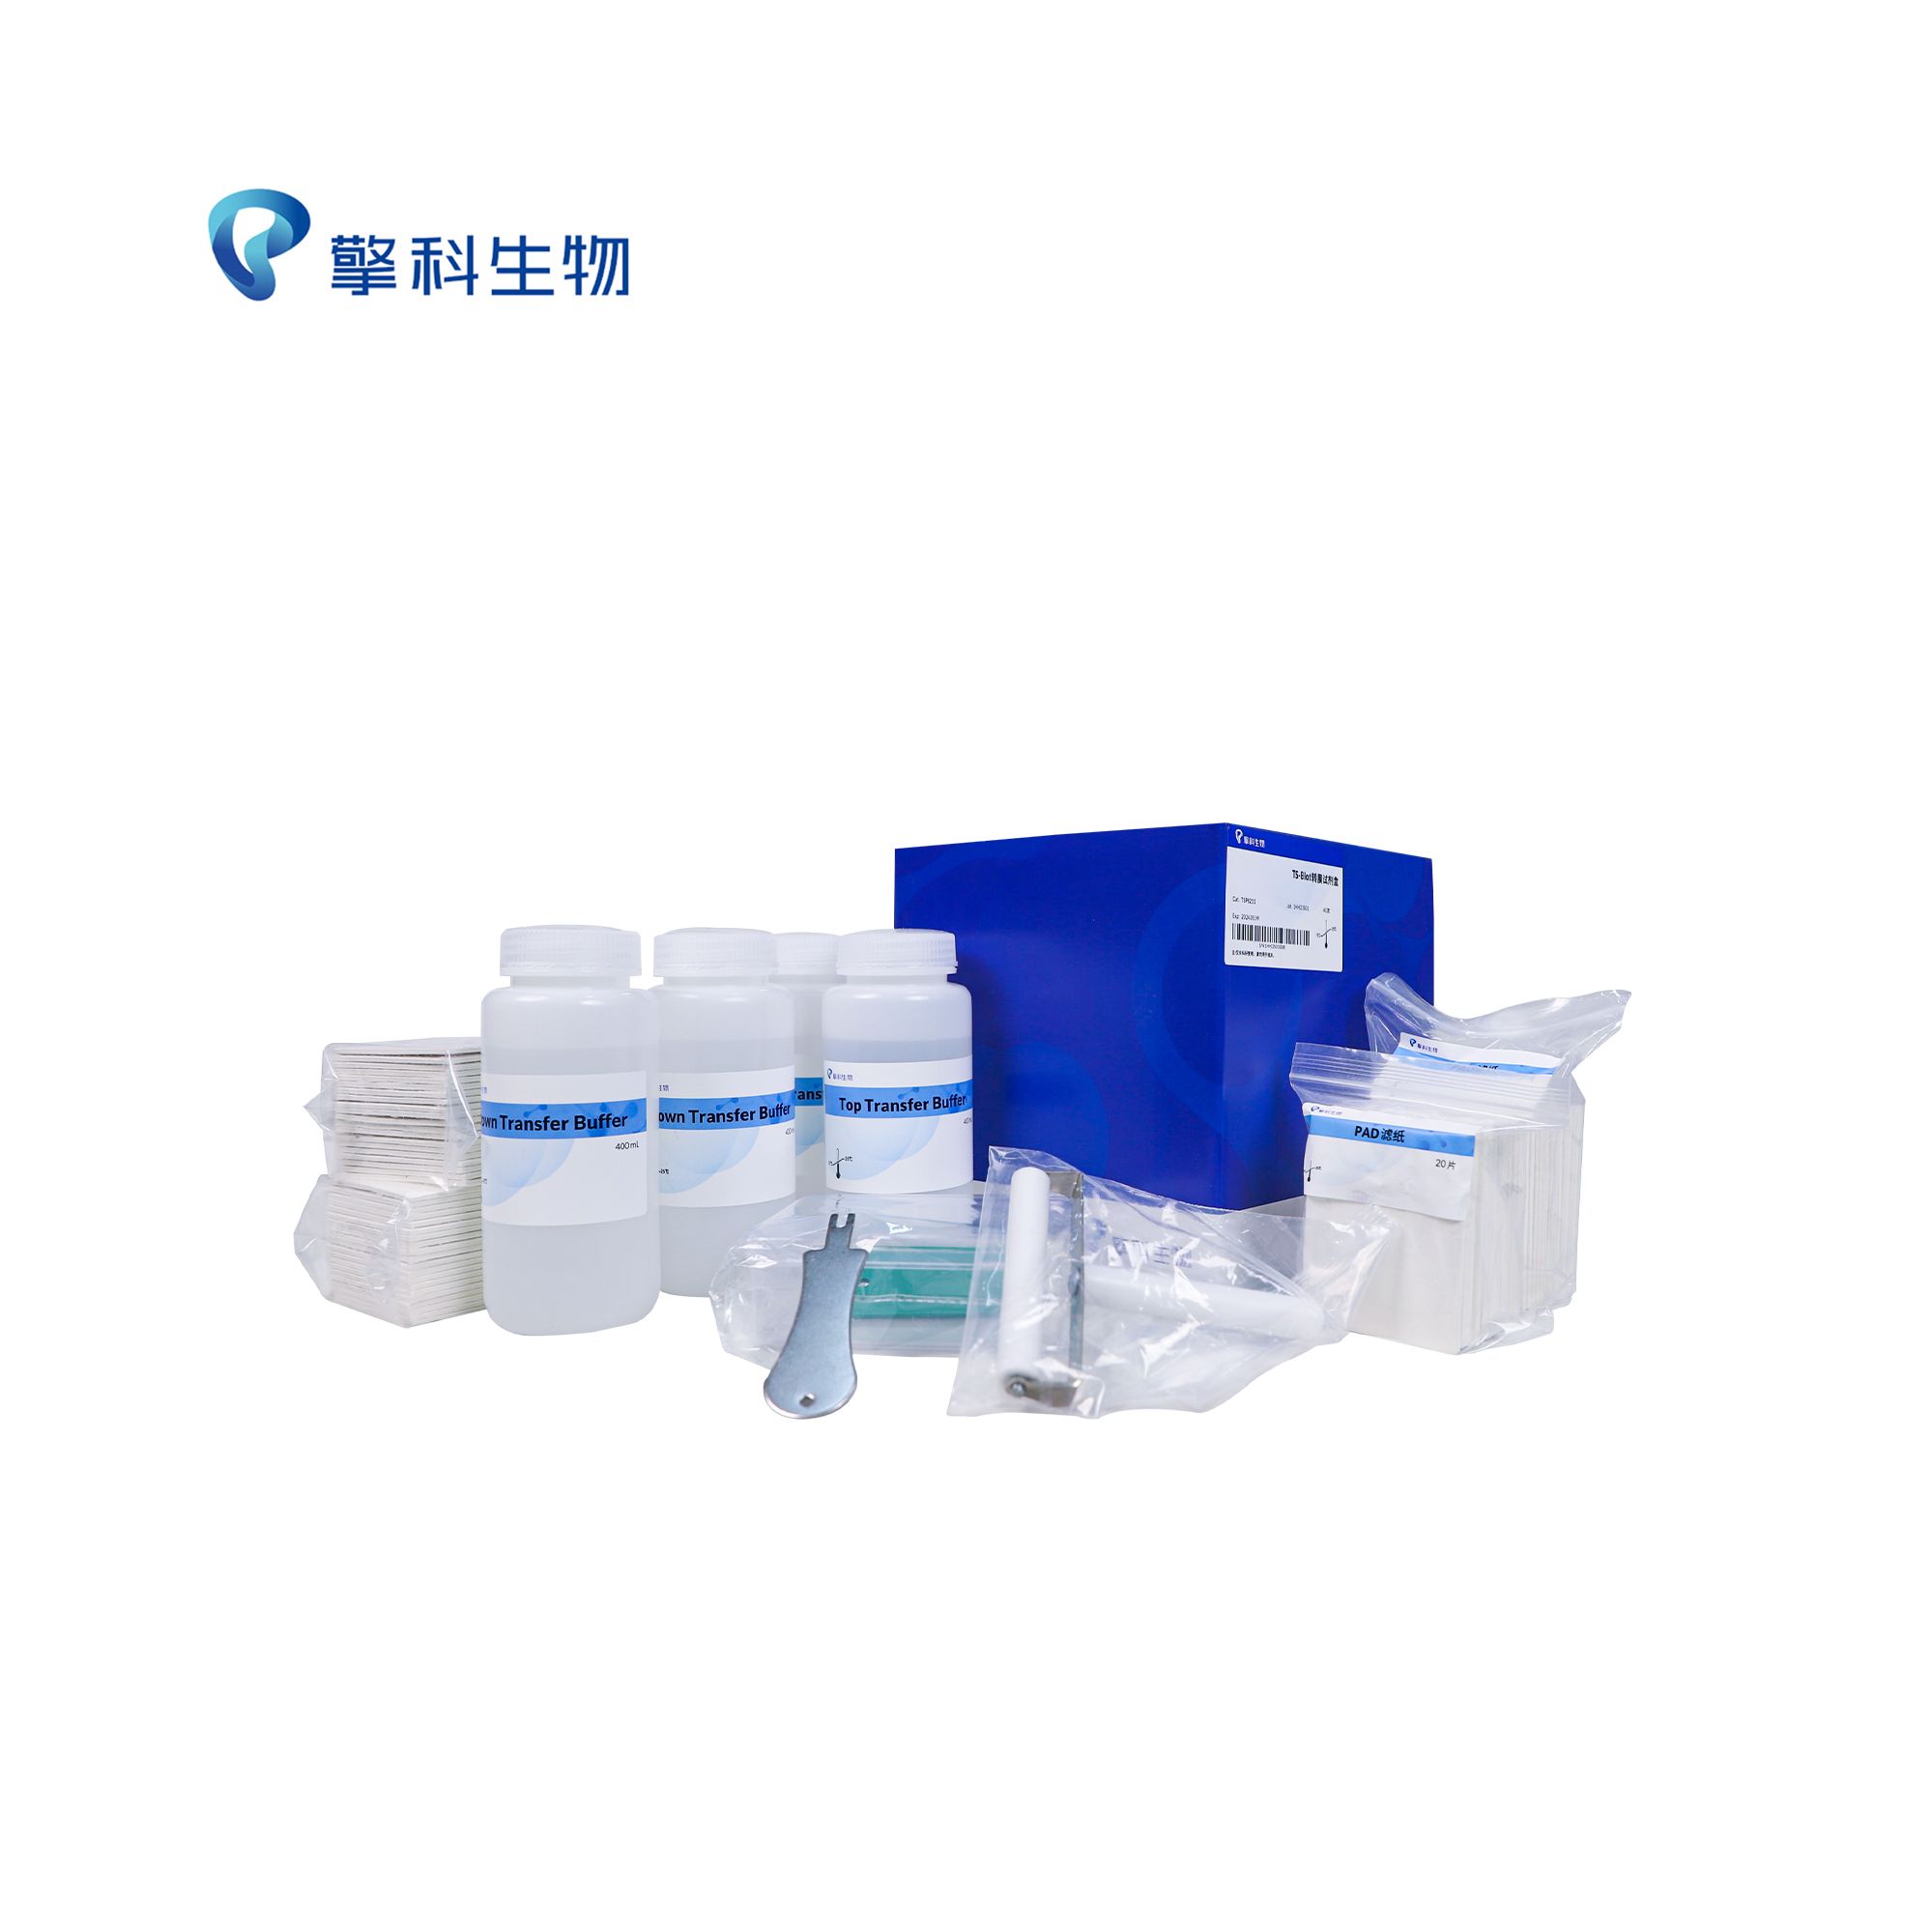 TS-Blot 转膜试剂盒/蛋白系列/擎科生物TSINGKE